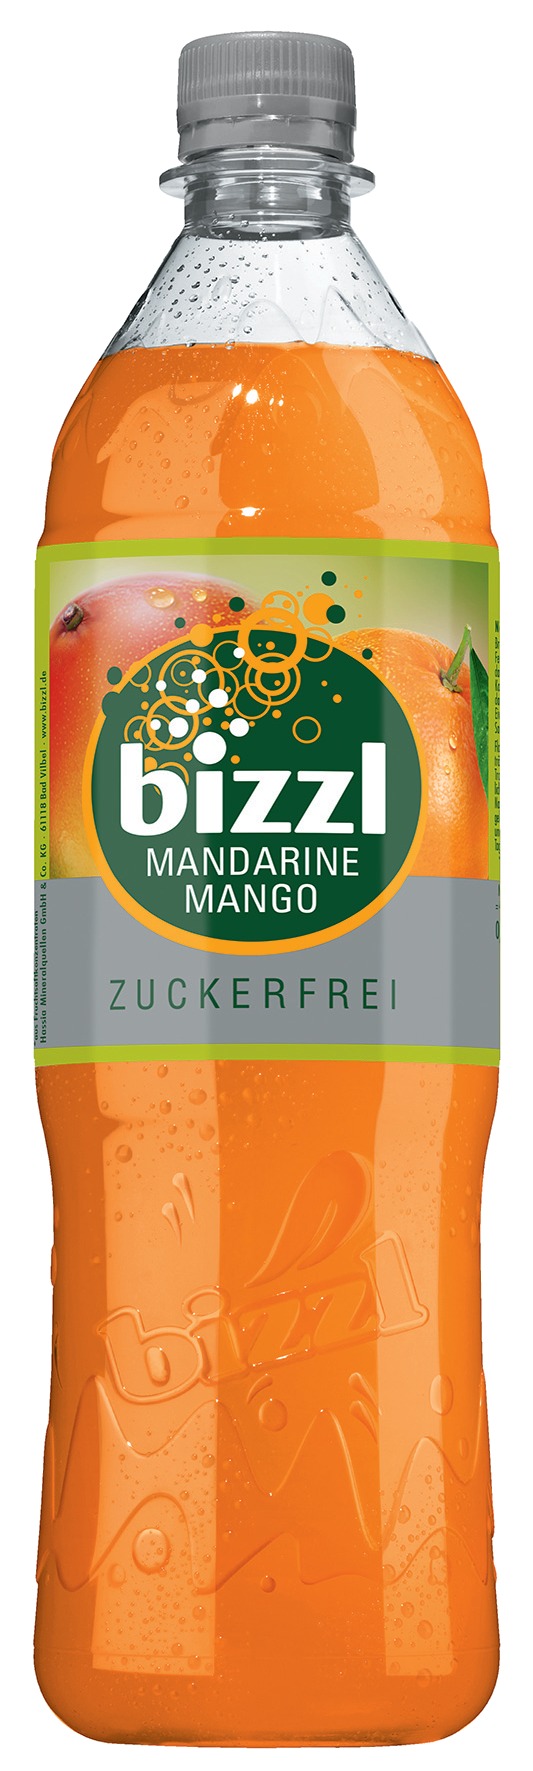 Bizzl Mandarine Mango Zuckerfrei